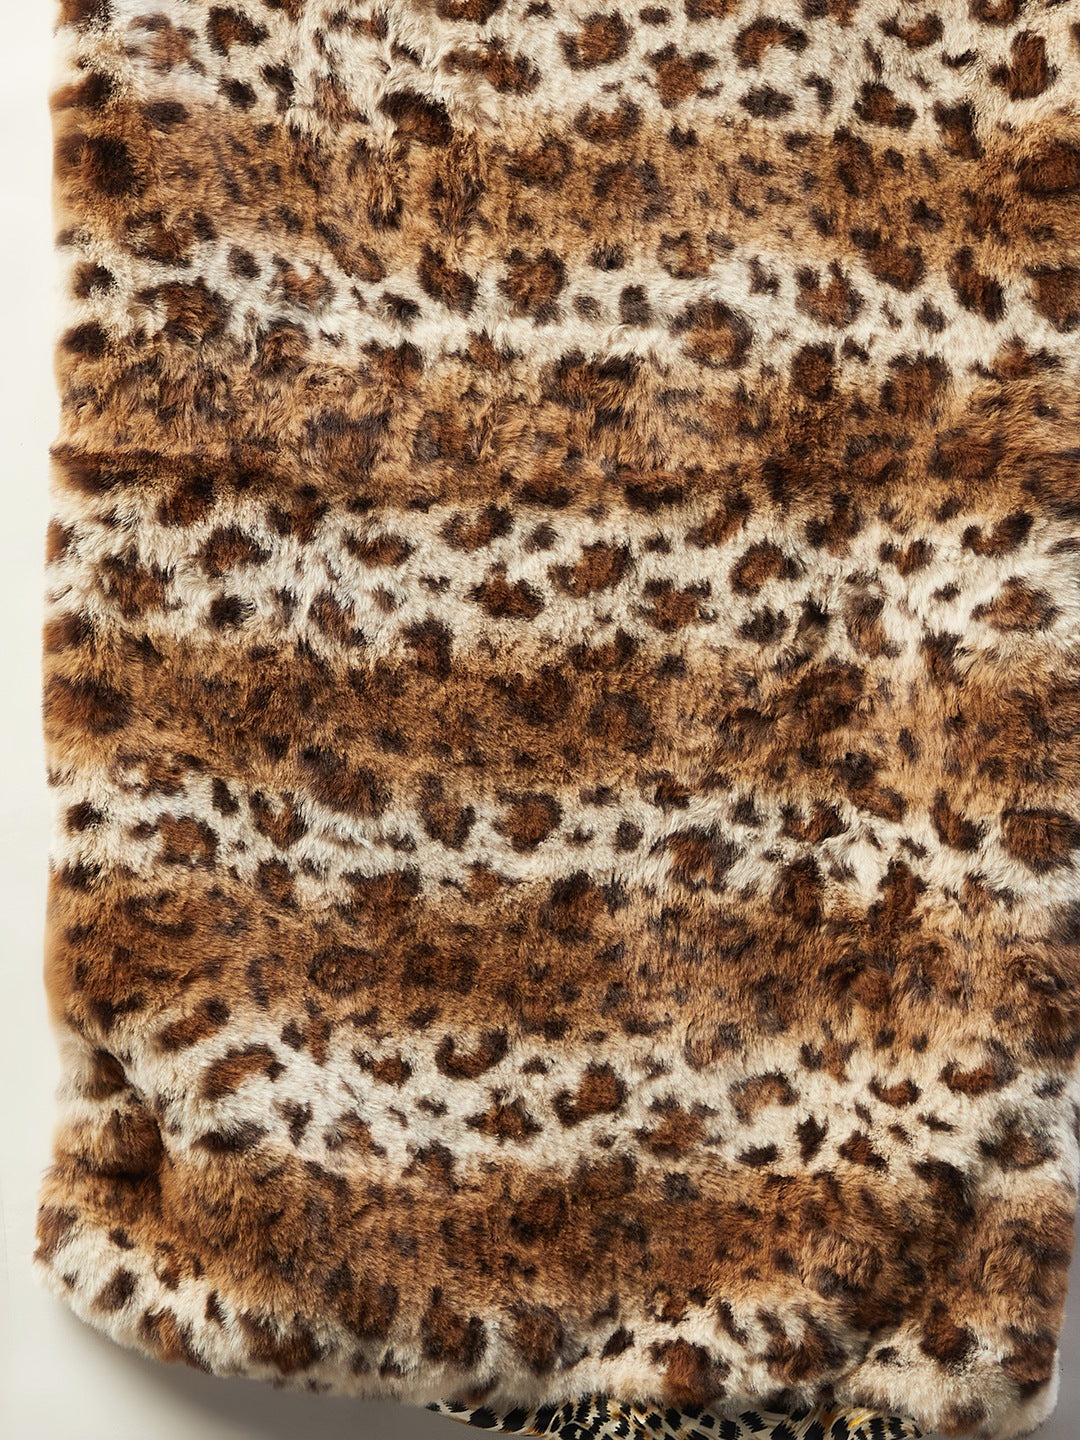 Brown Leopard Fur Cape